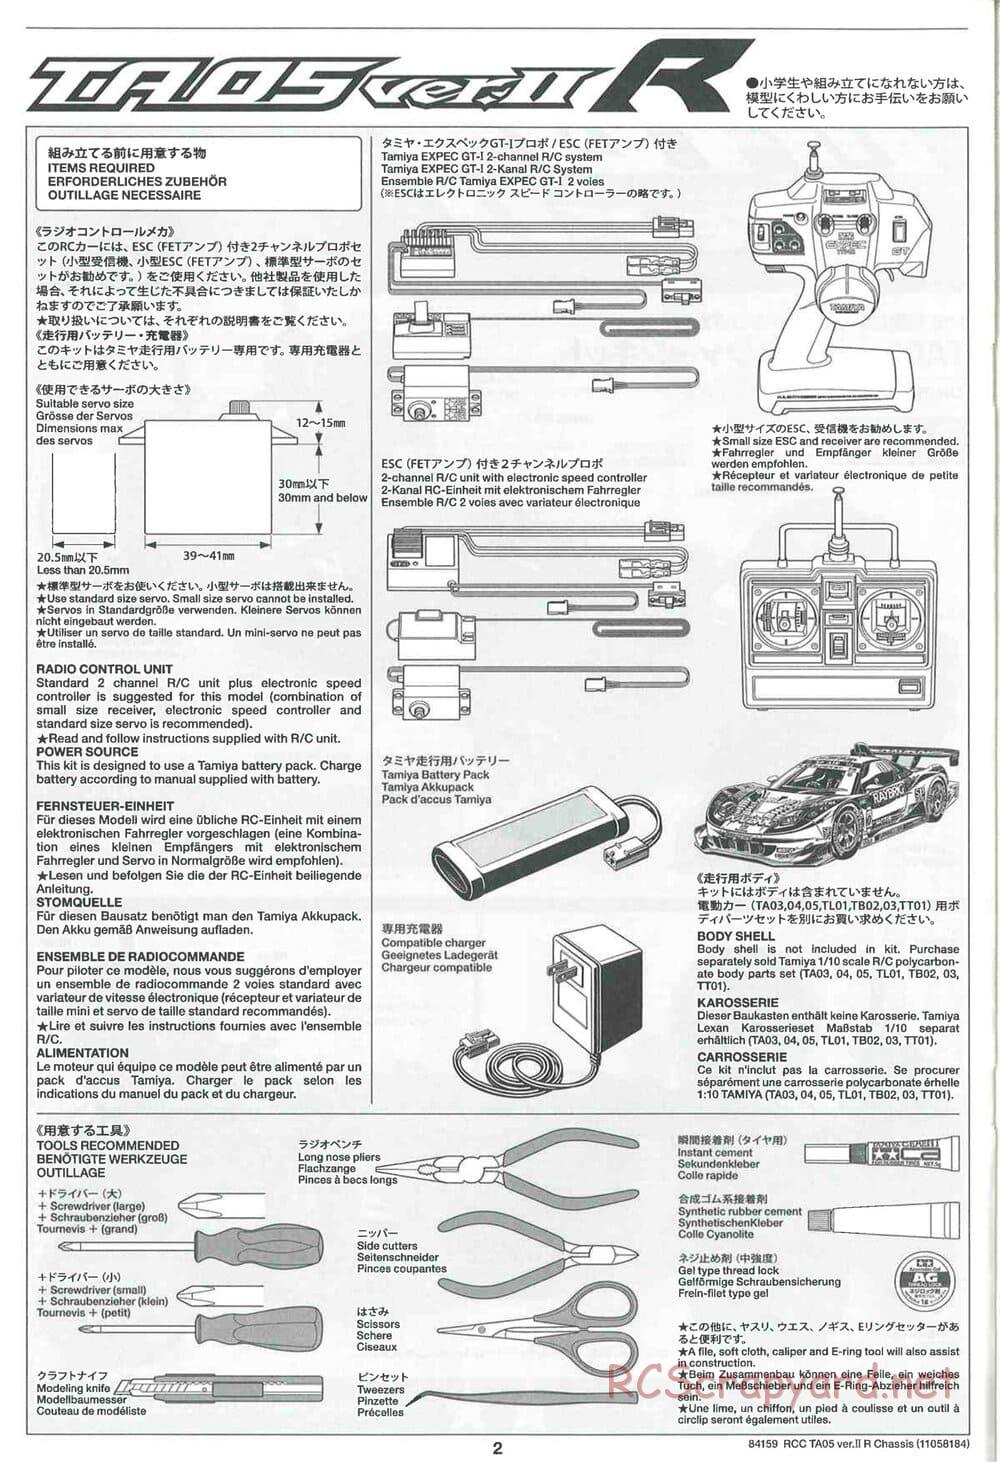 Tamiya - TA05 Ver.II R Chassis - Manual - Page 2